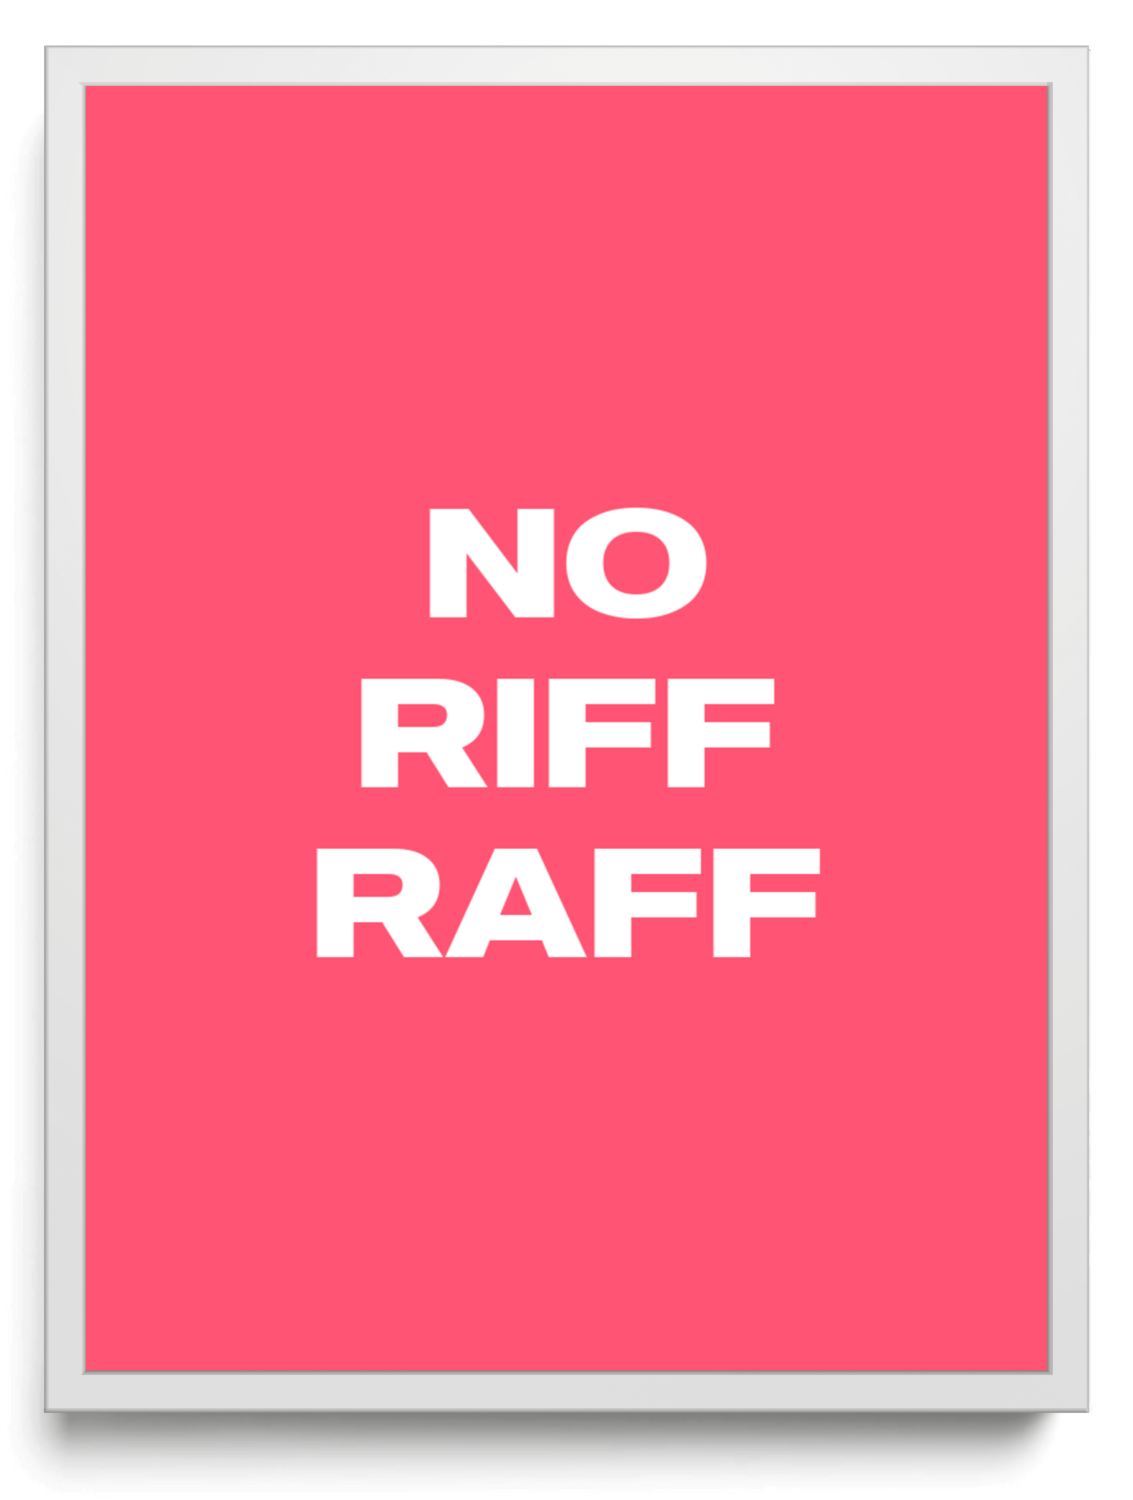 No riff raff